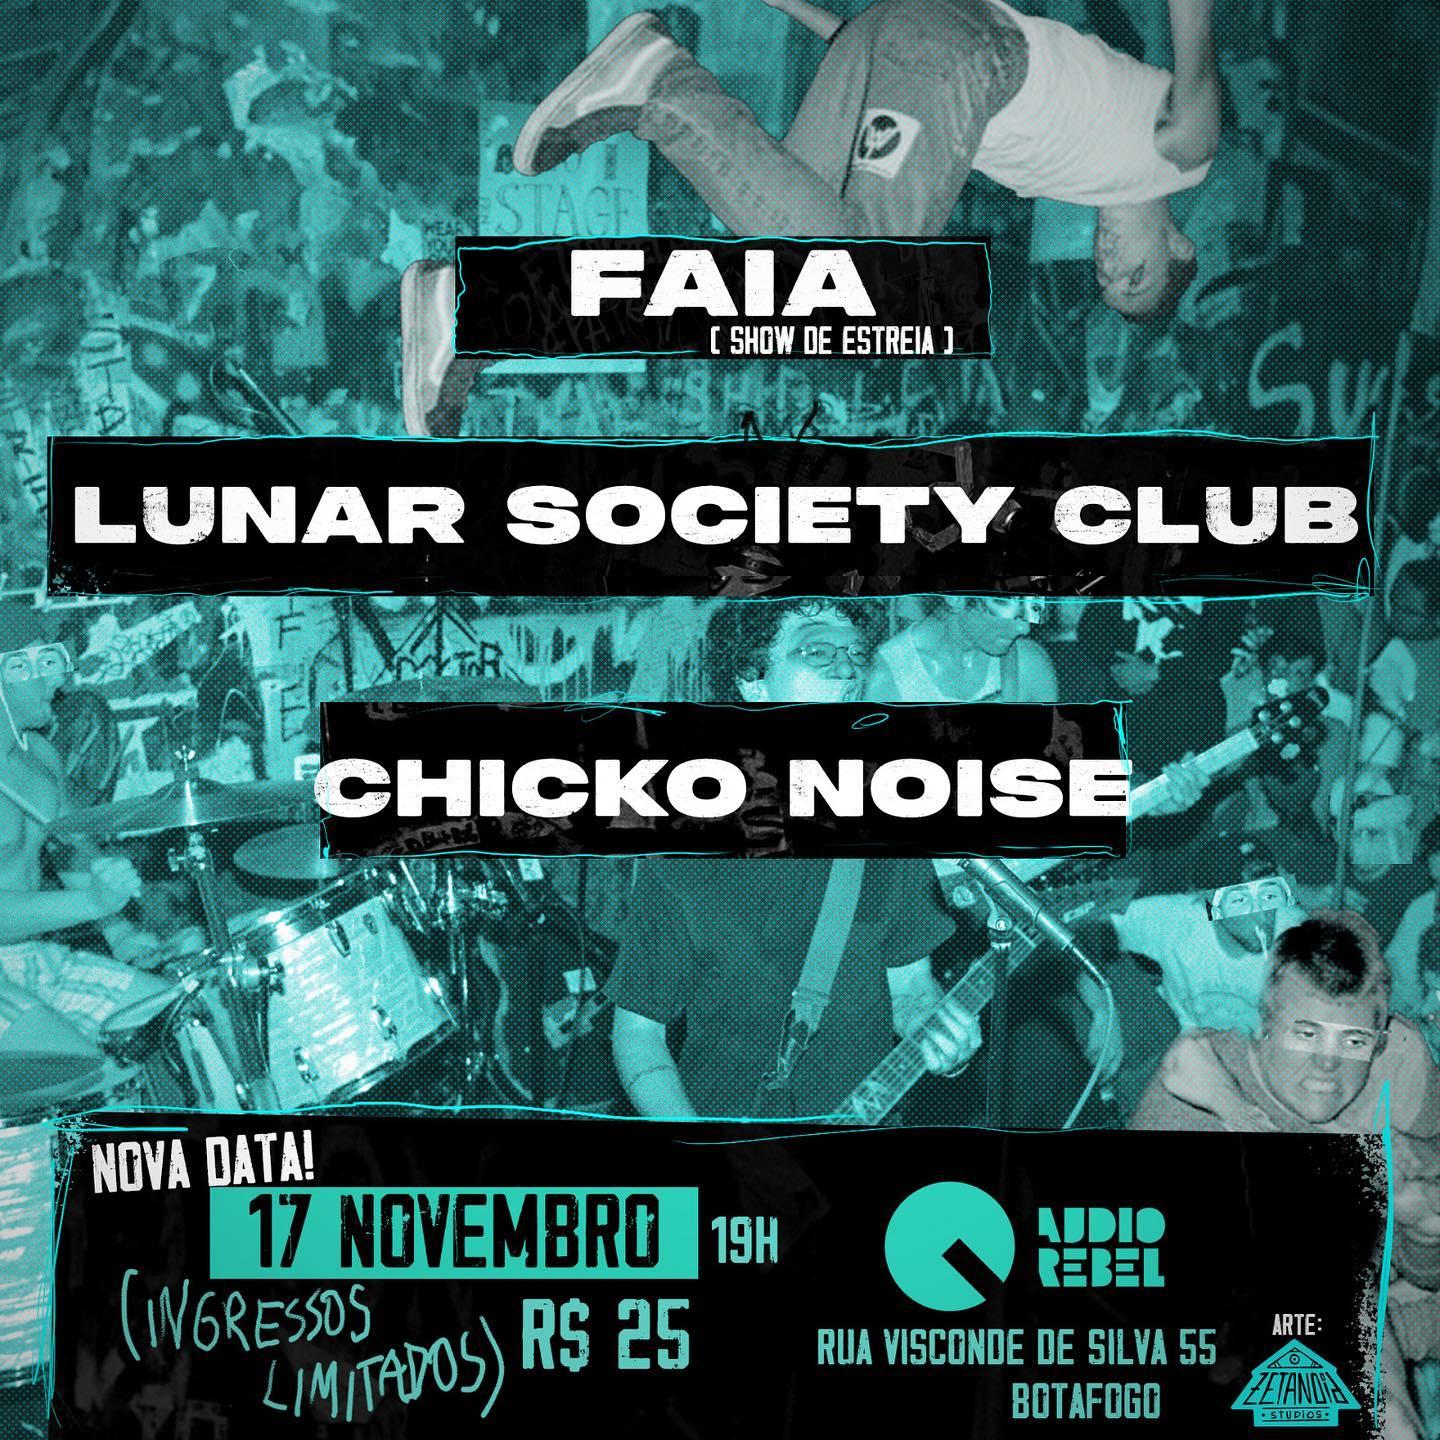 Faia + Lunar Society Club + Chicko Noise